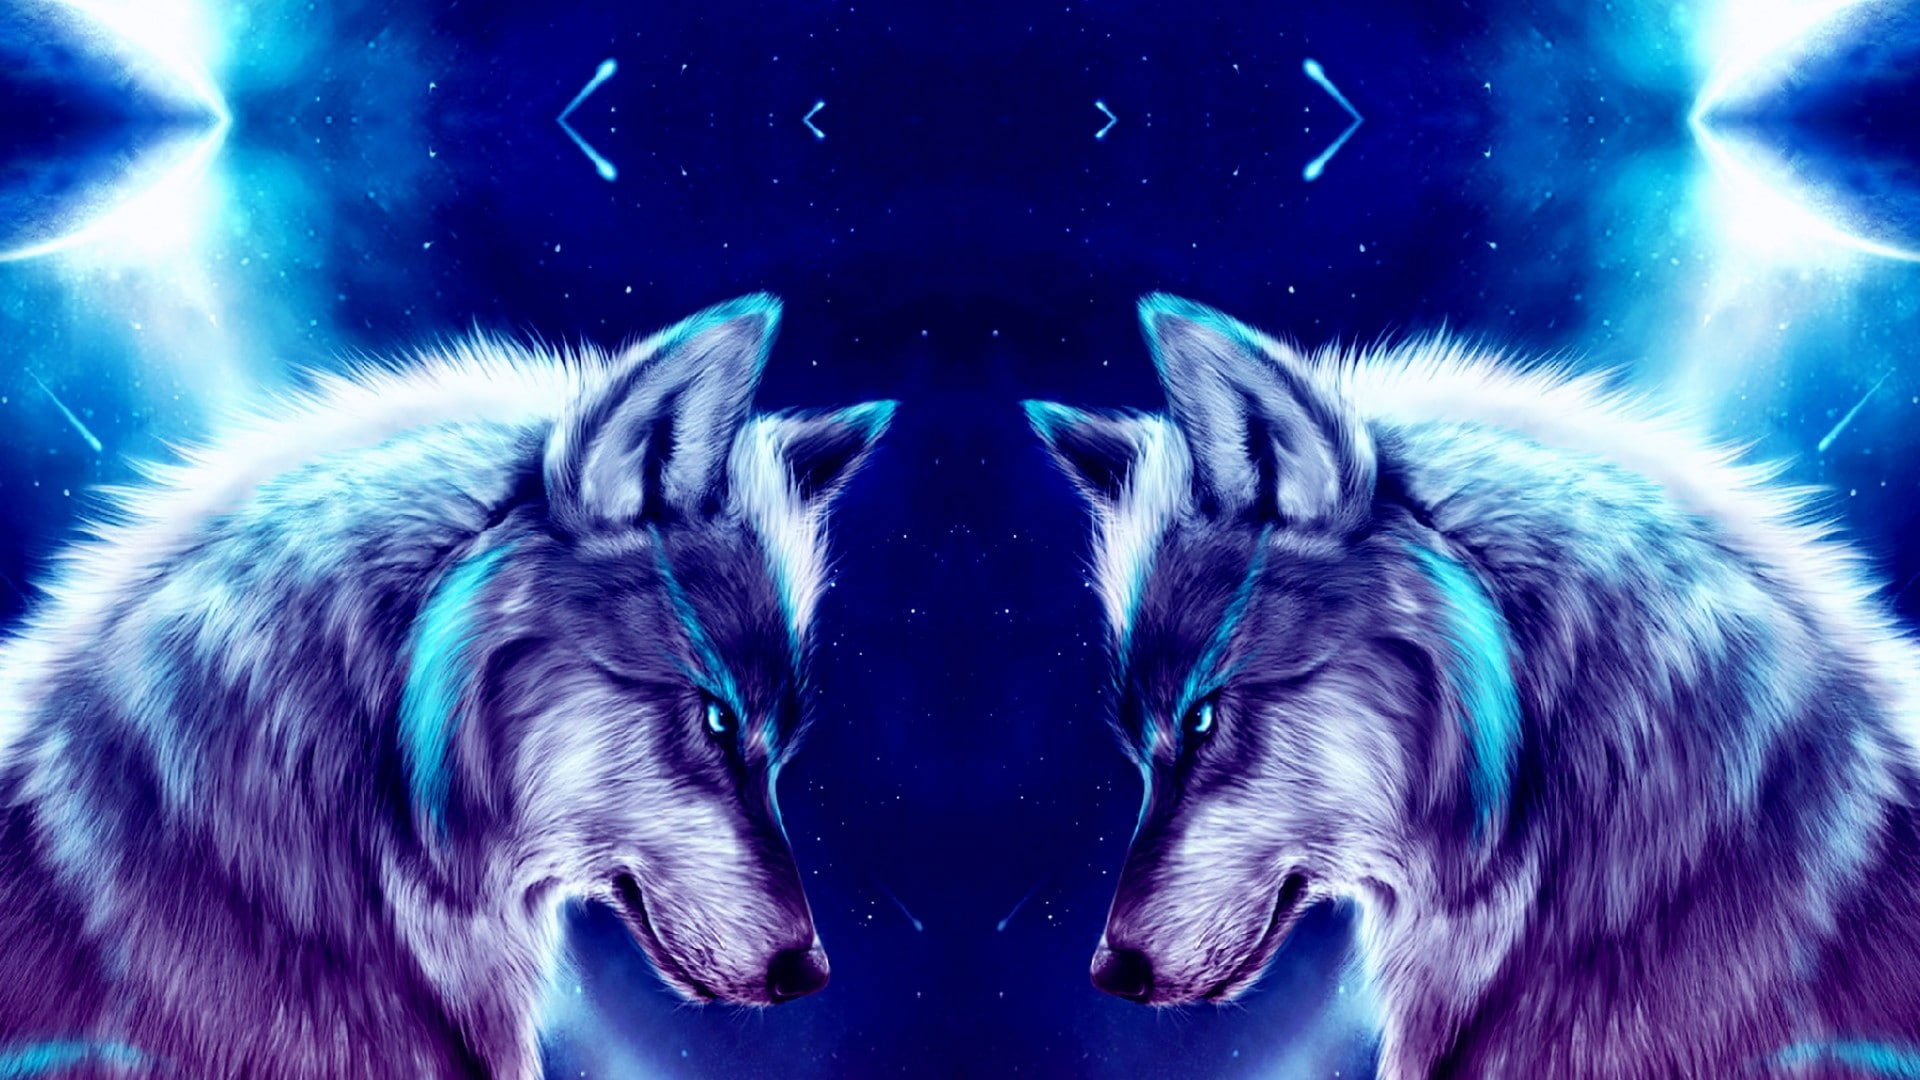 Animals wallpaper, space, wolf, art, wolves, night, digital art